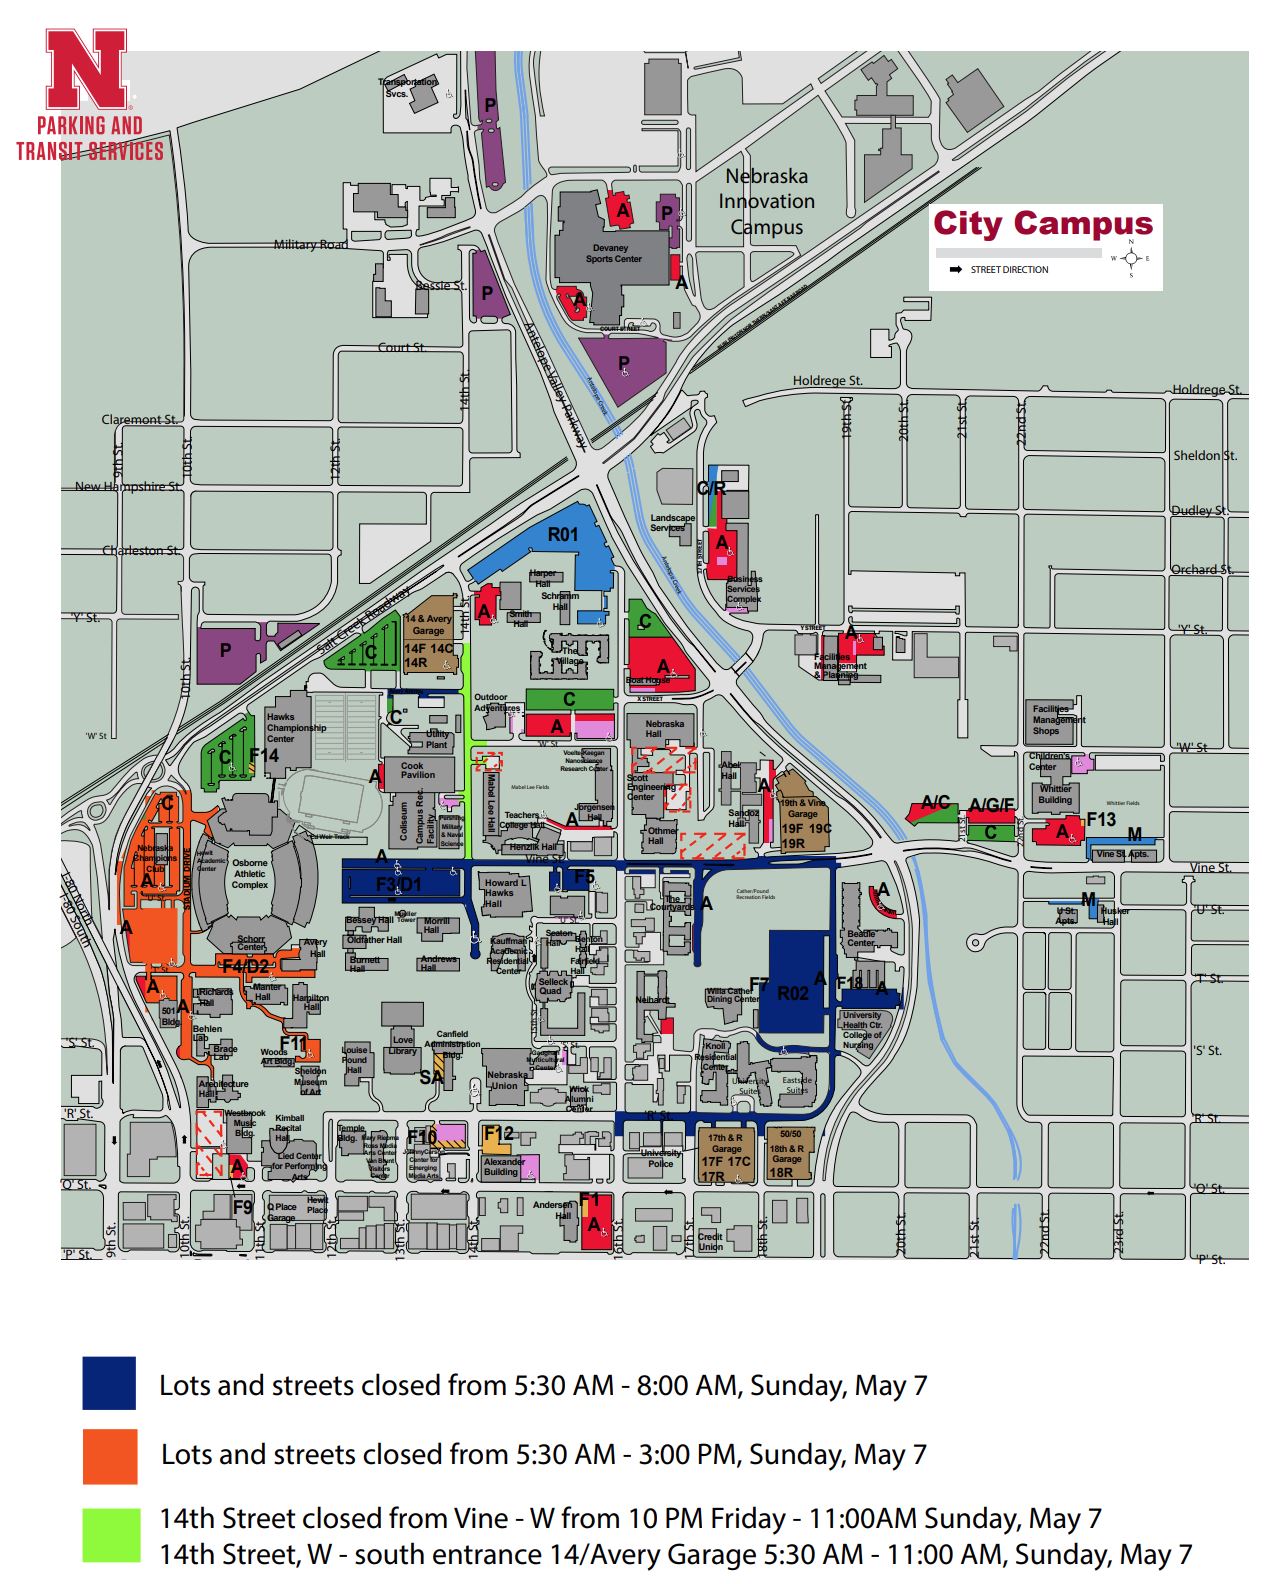 Lincoln Marathon will impact City Campus Announce University of